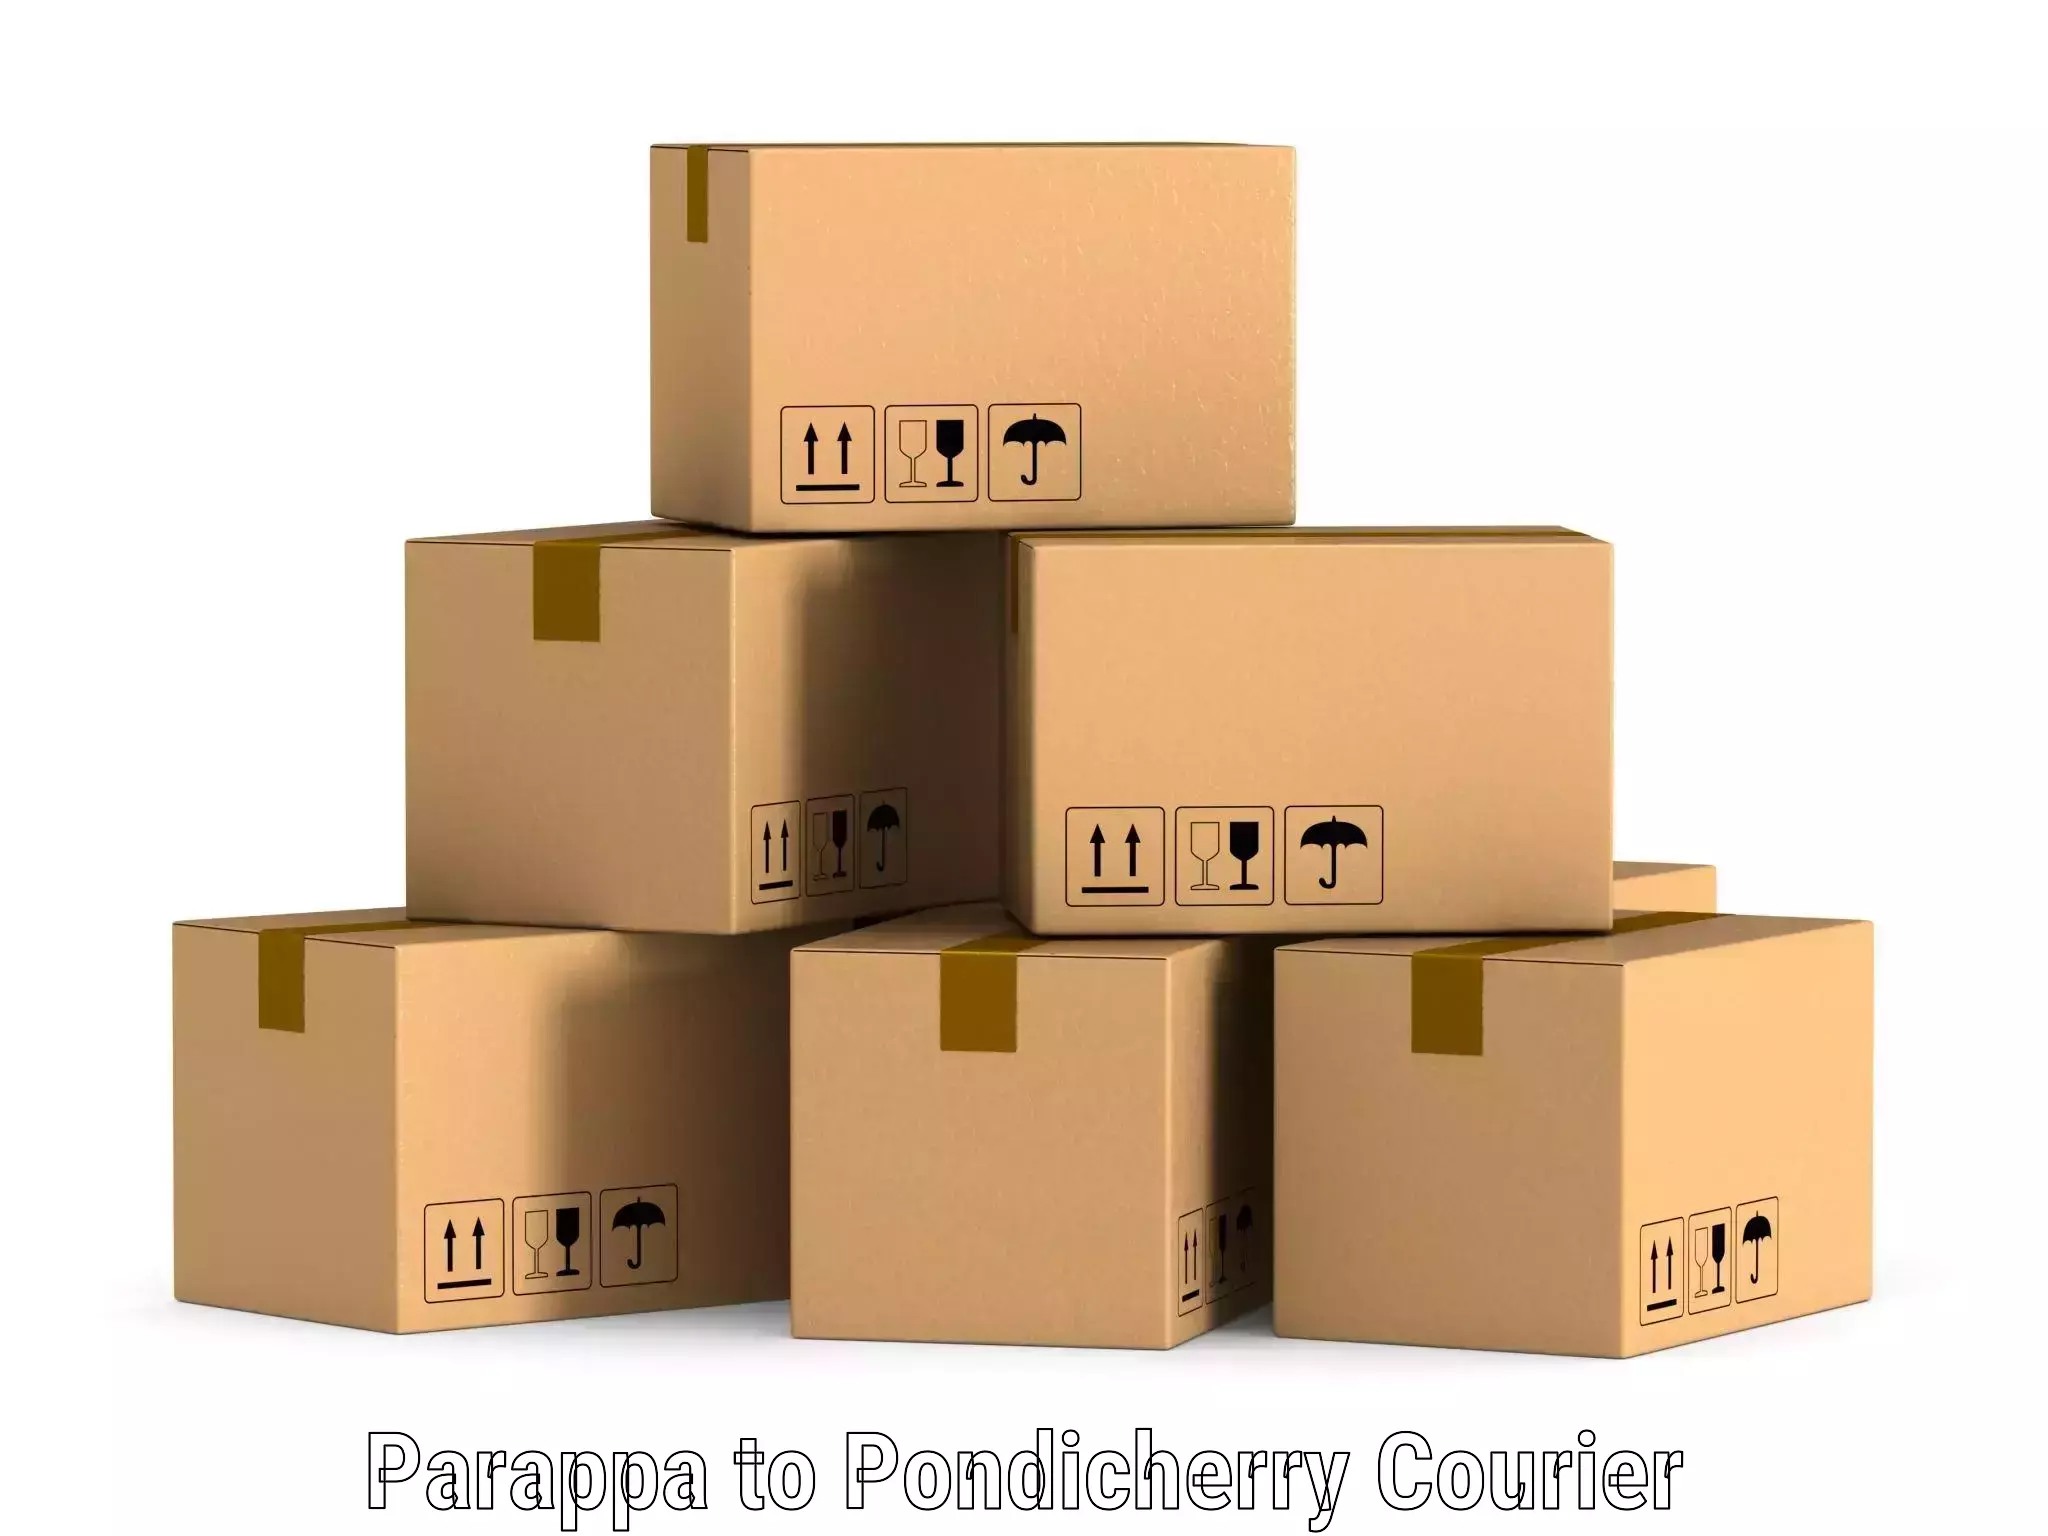 International courier networks Parappa to Pondicherry